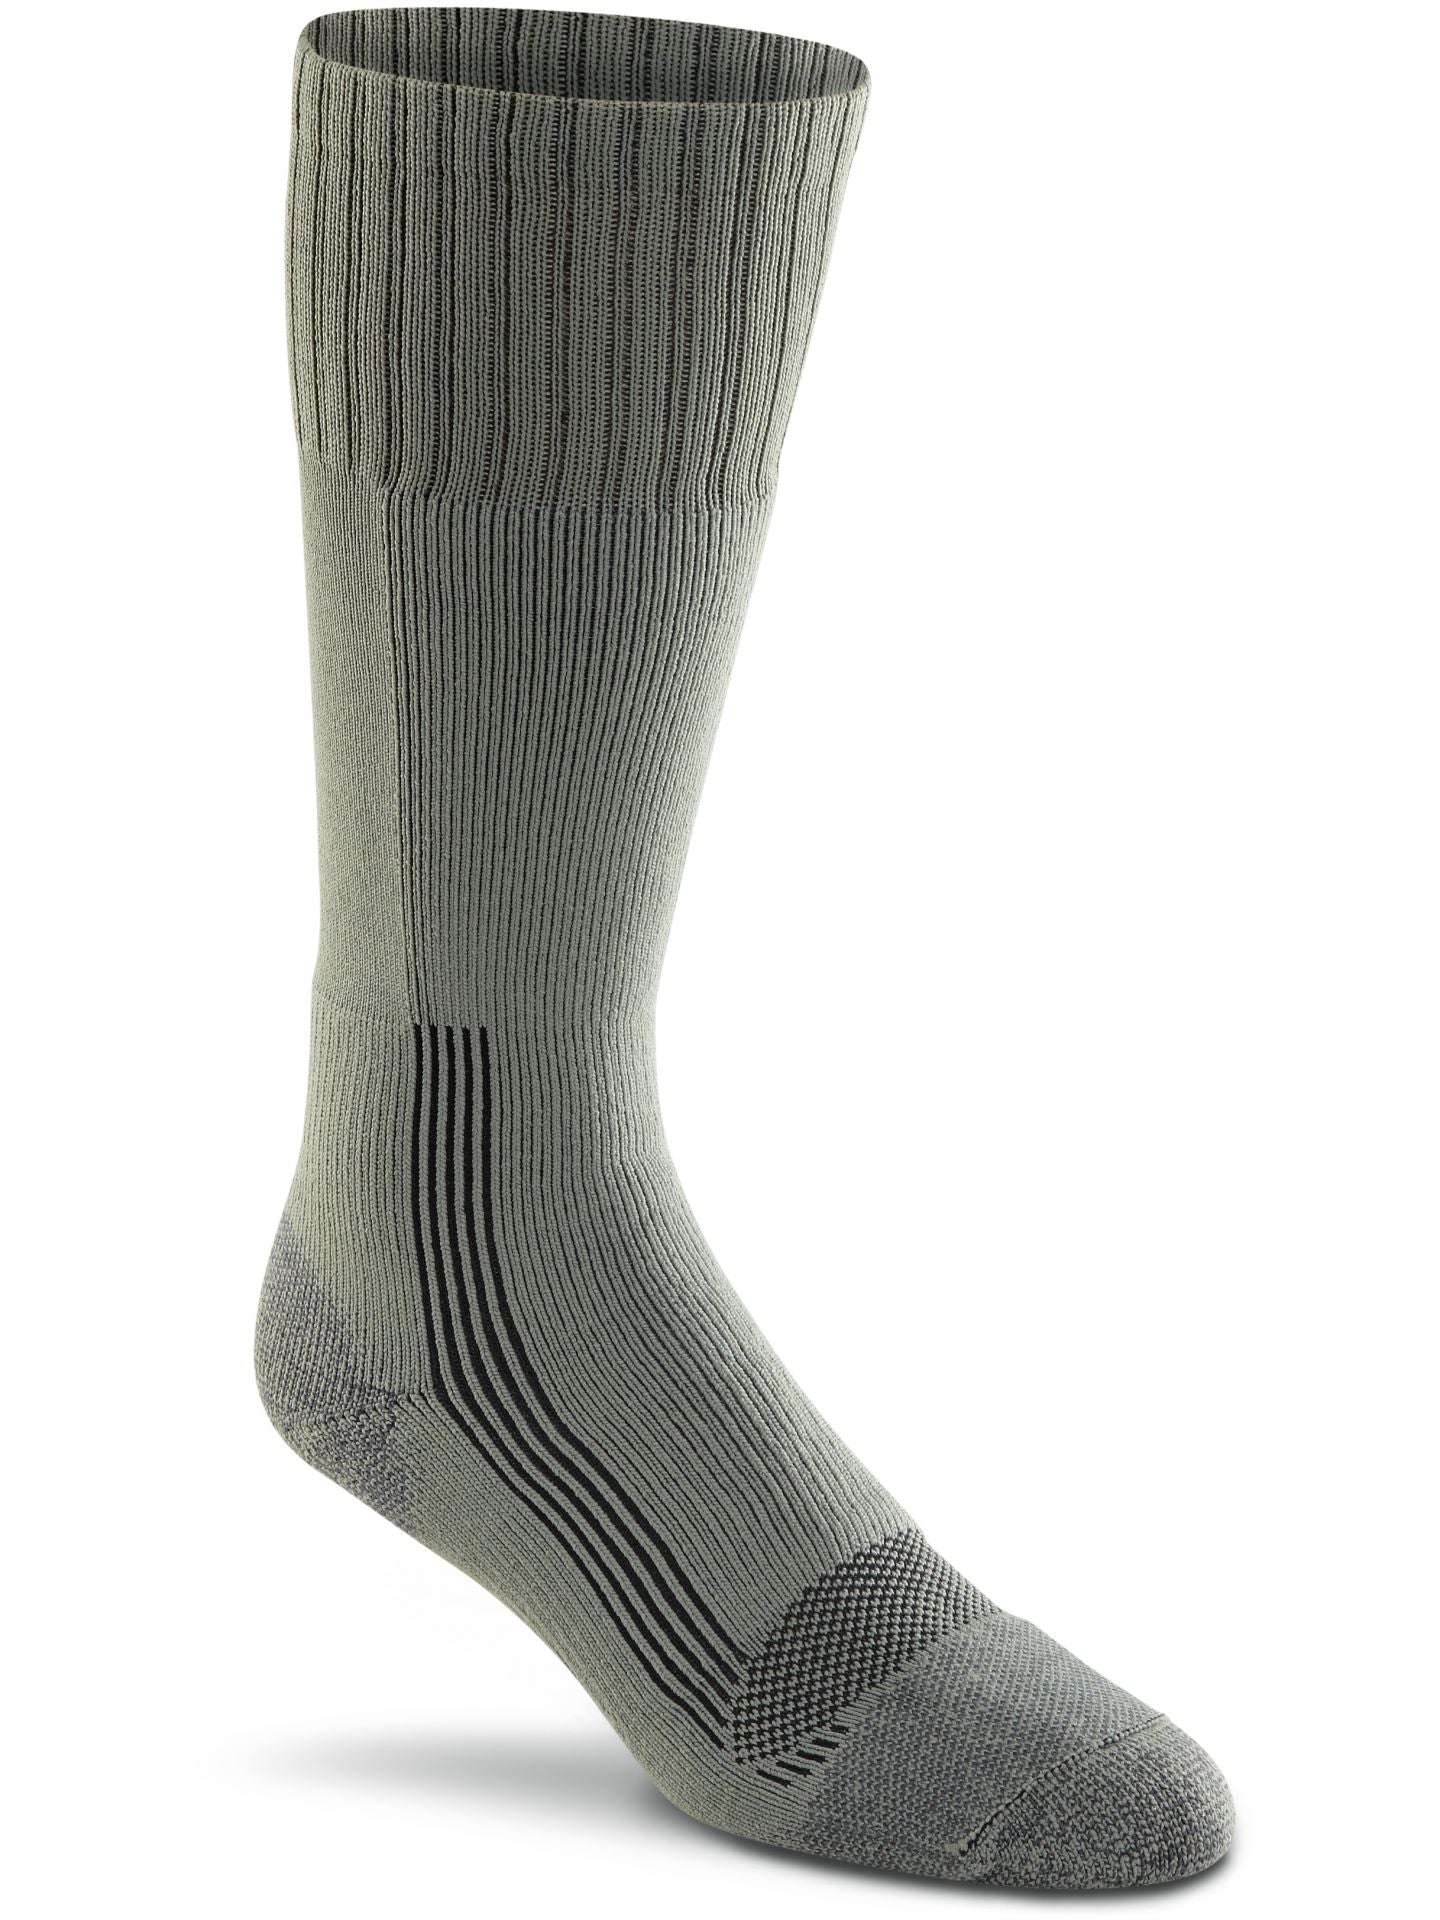 Unisex Wick Dry Maximum Crew Socks